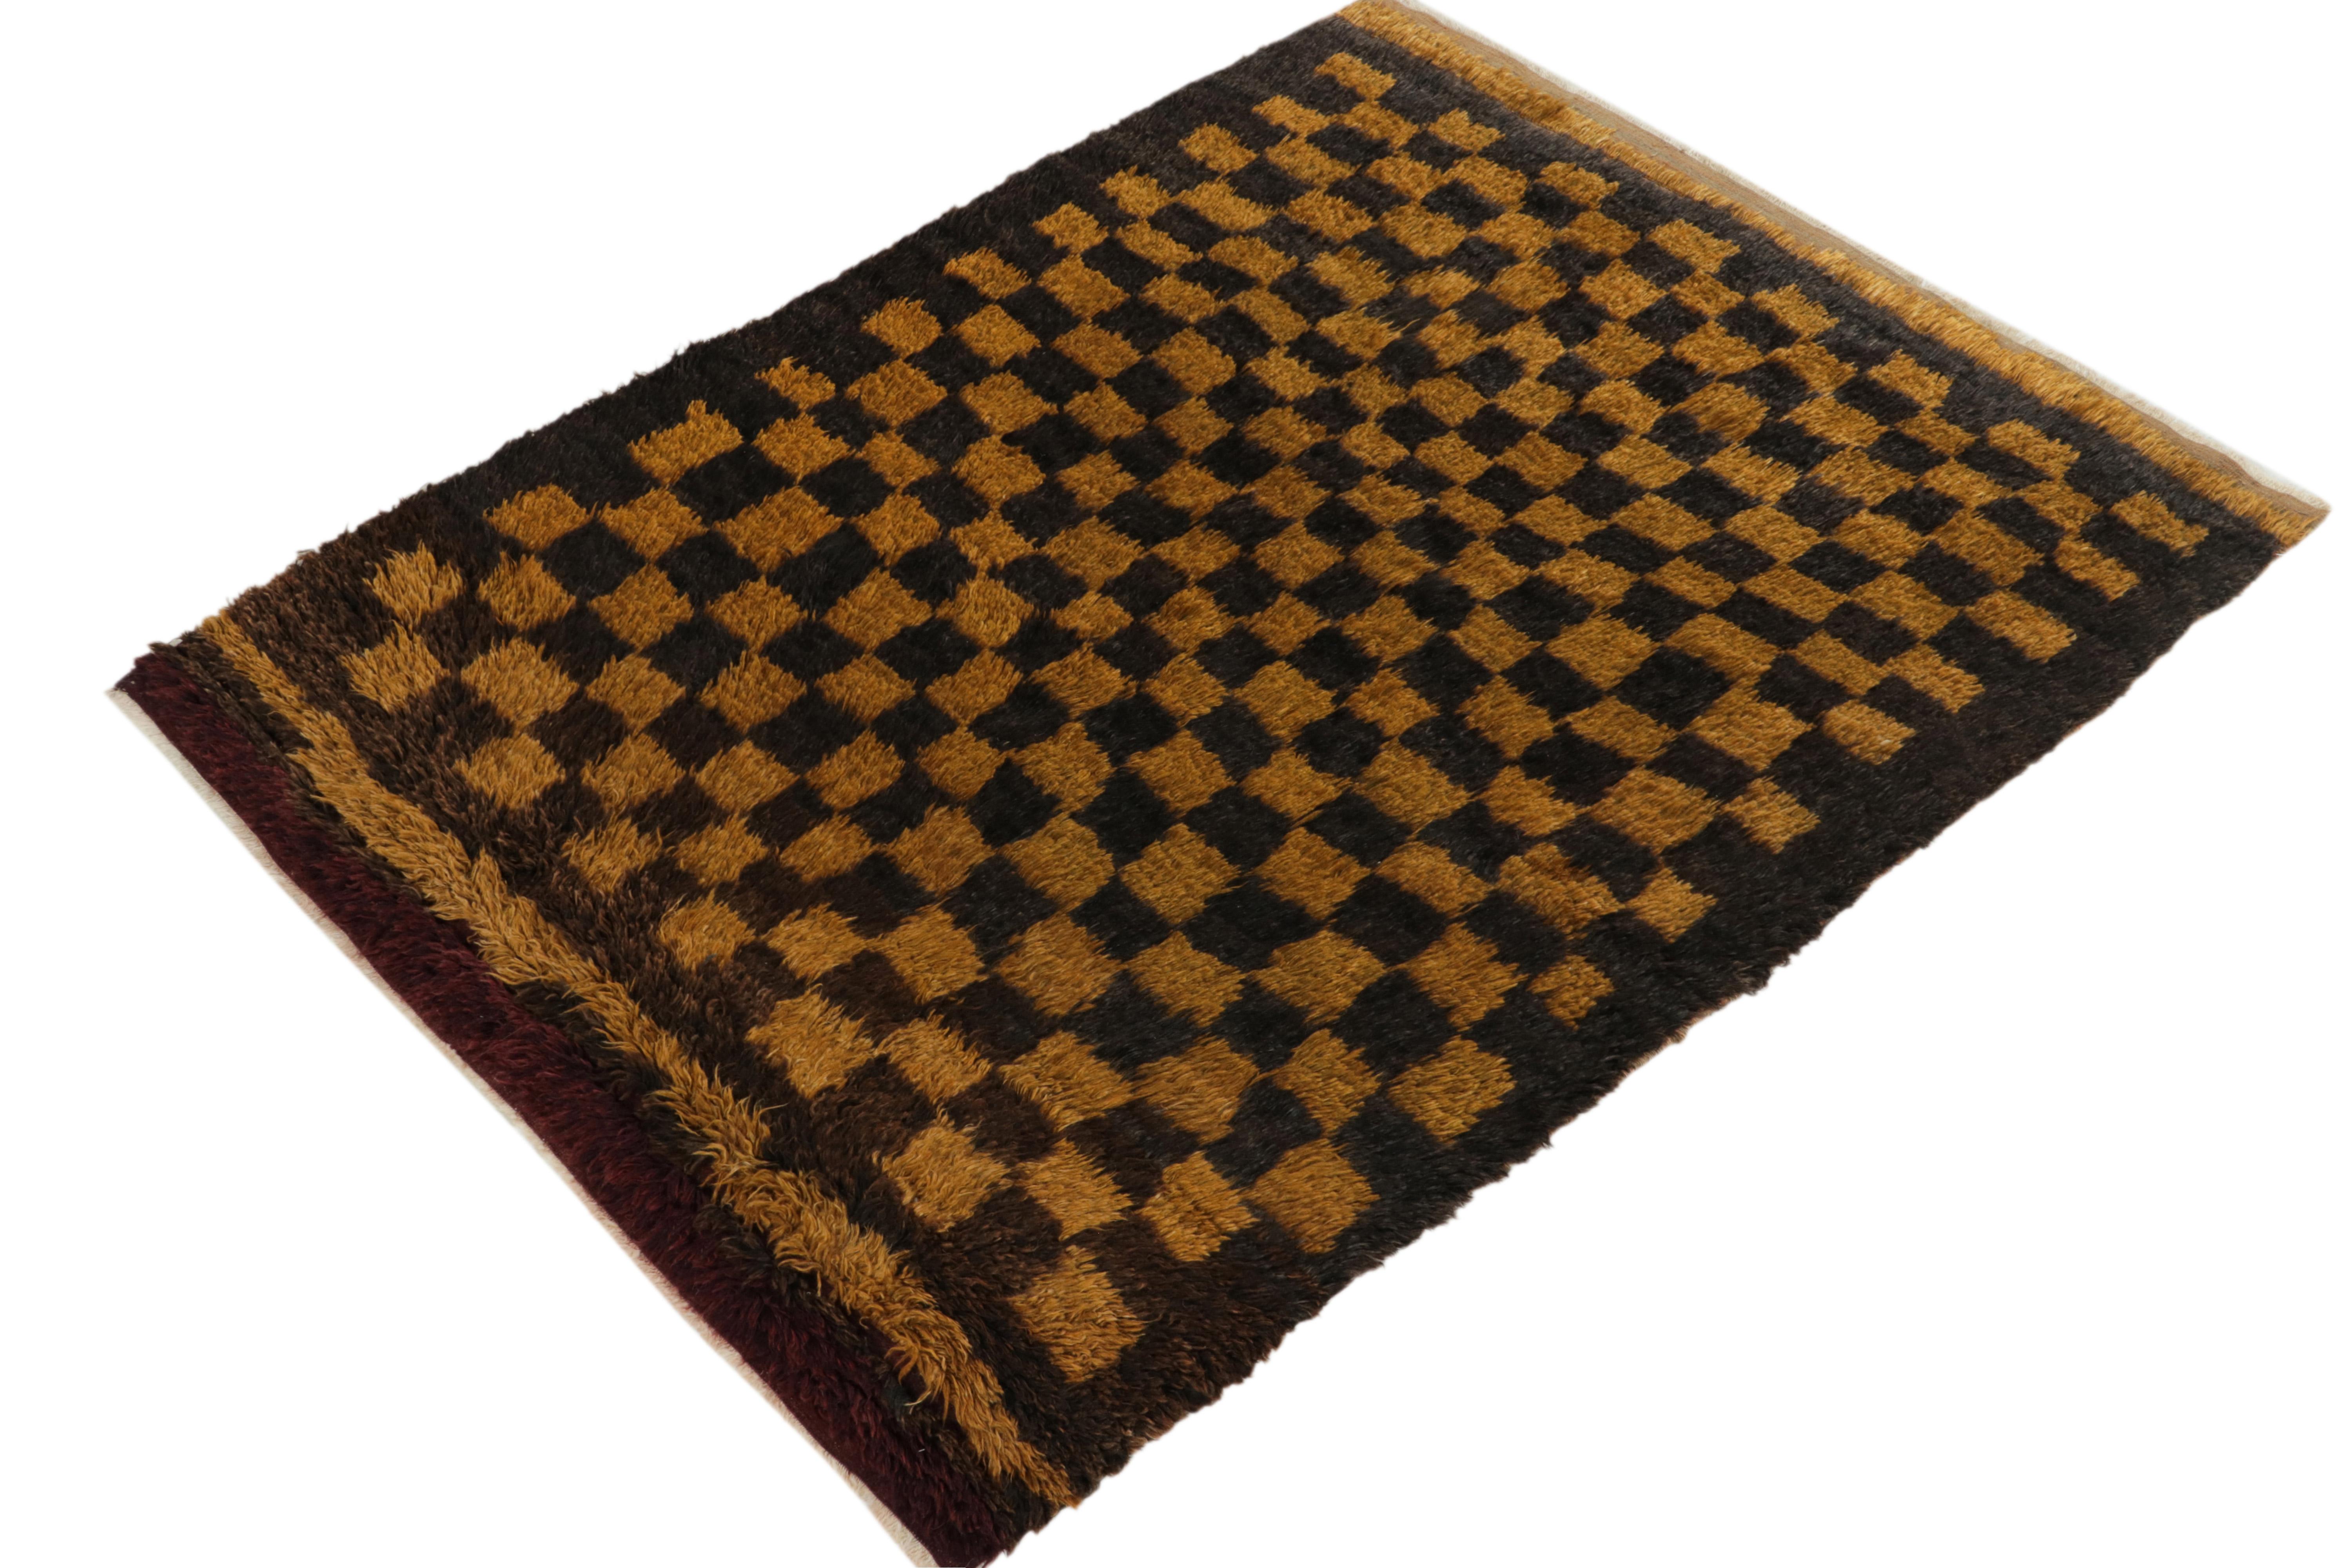 Tribal 1950s Vintage Tulu Shag Rug in Black, Golden Chessboard Geometric by Rug & Kilim For Sale